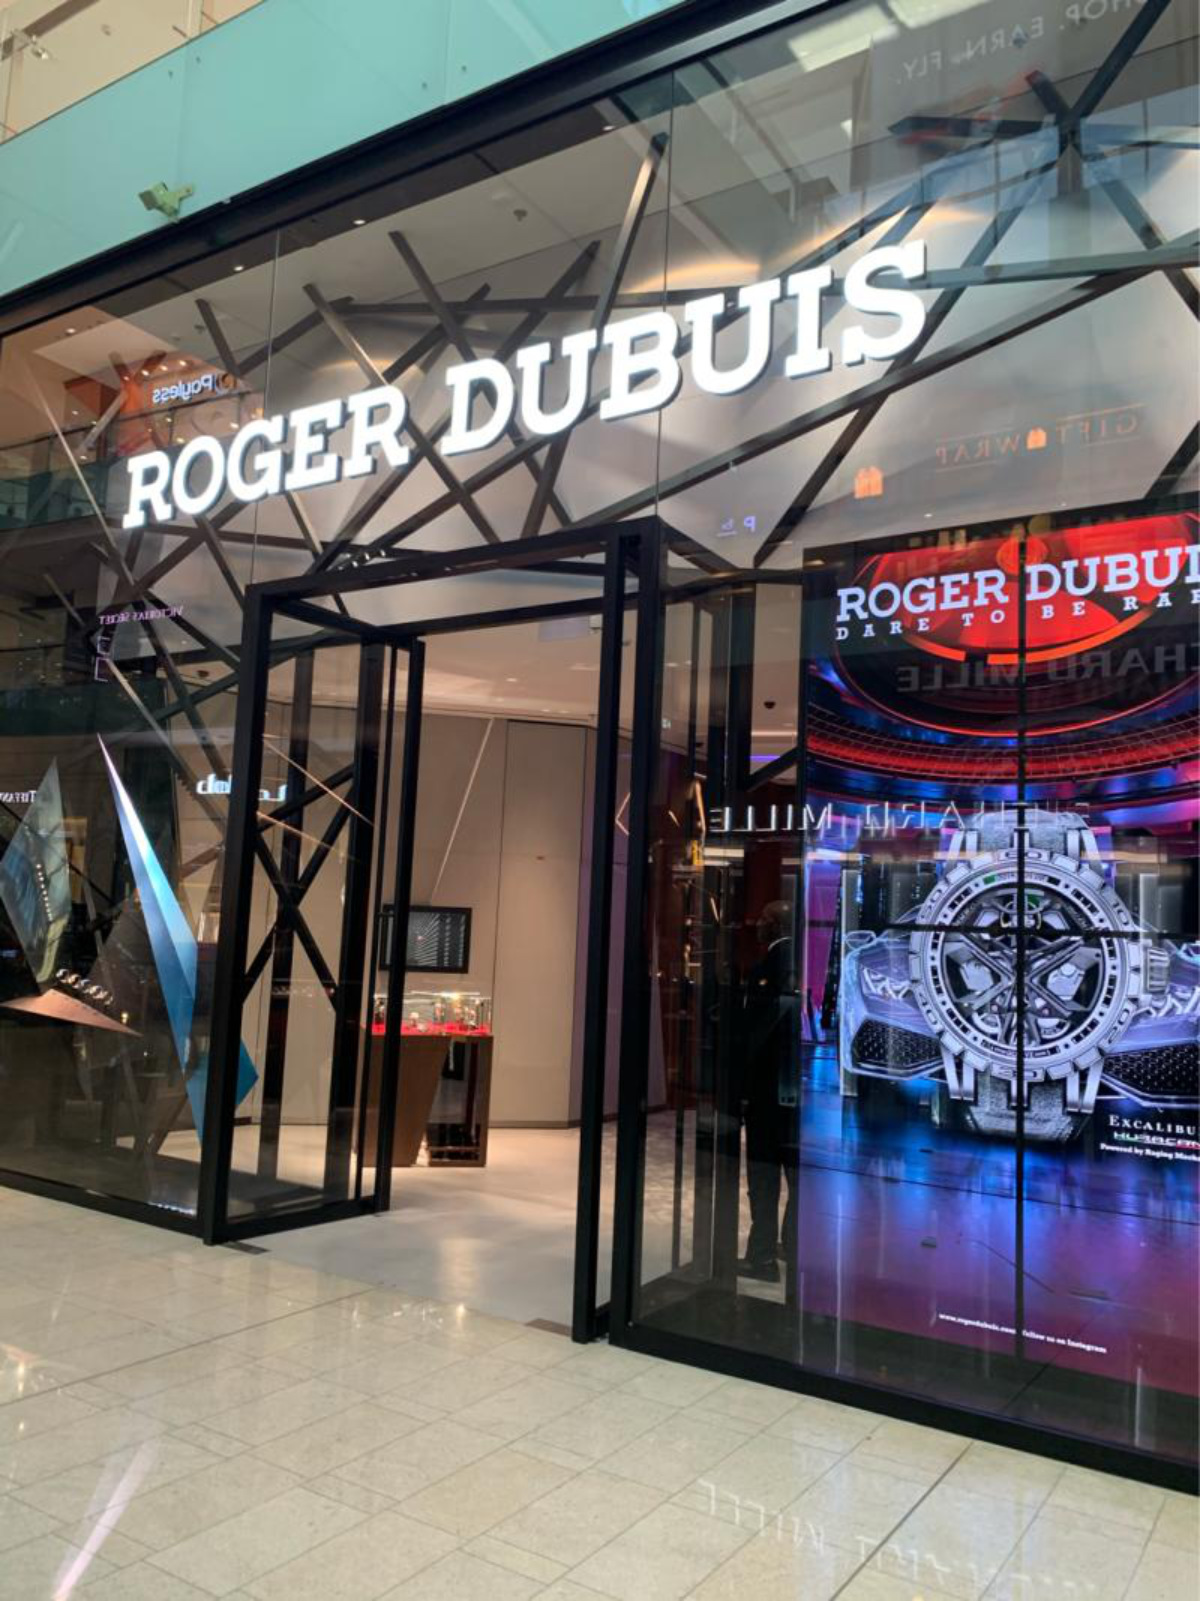 New Roger Dubuis boutique in Dubaï